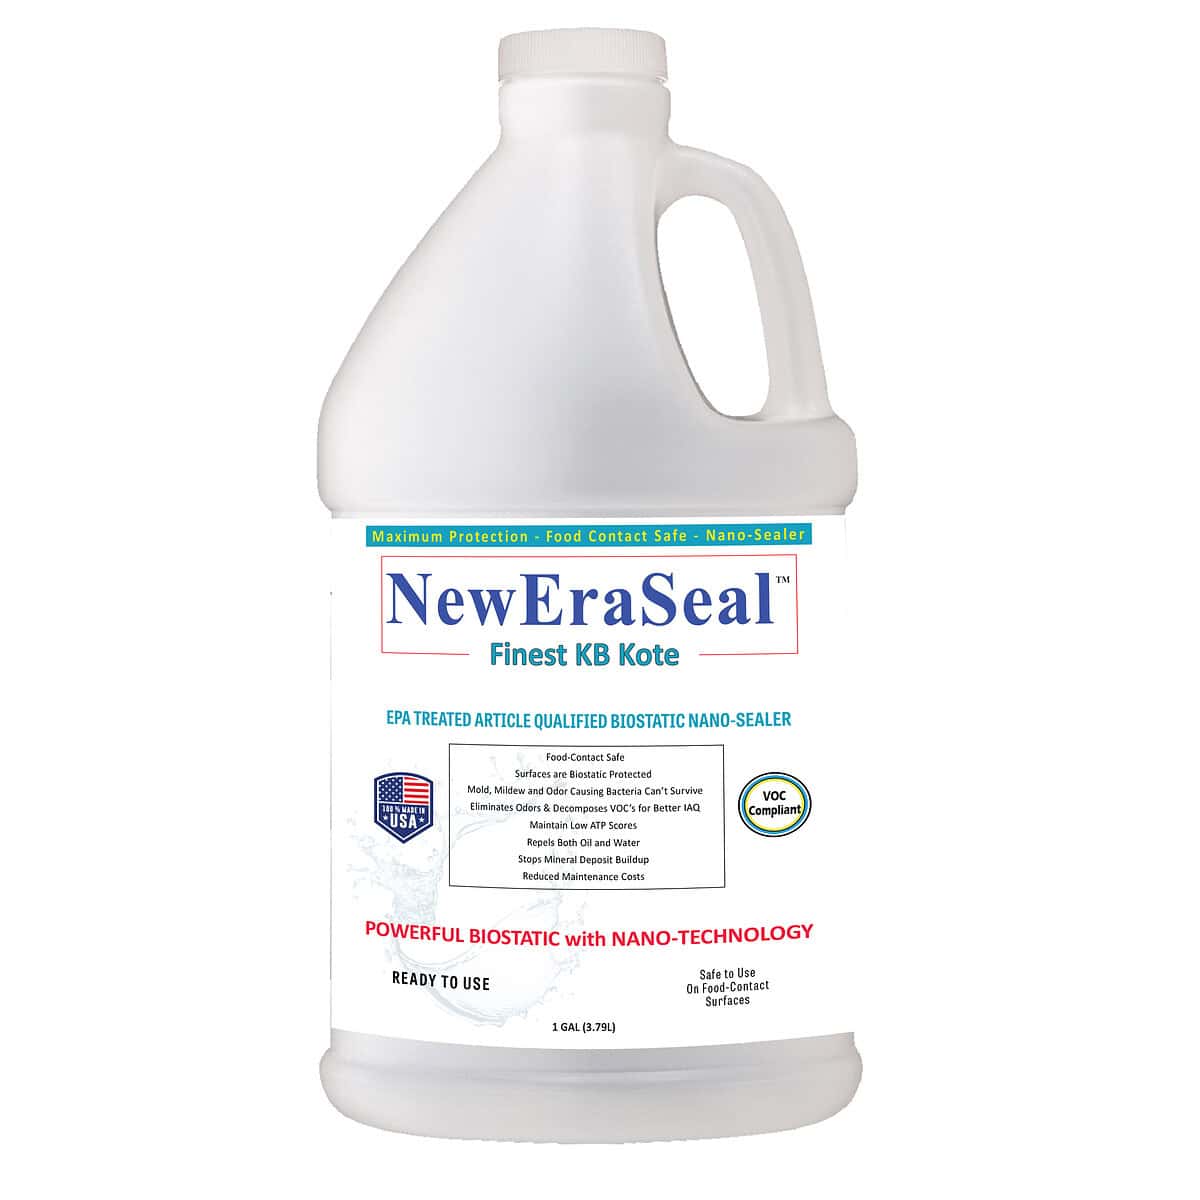 NewEraSeal Finest KB Kote 1 gallon bottle